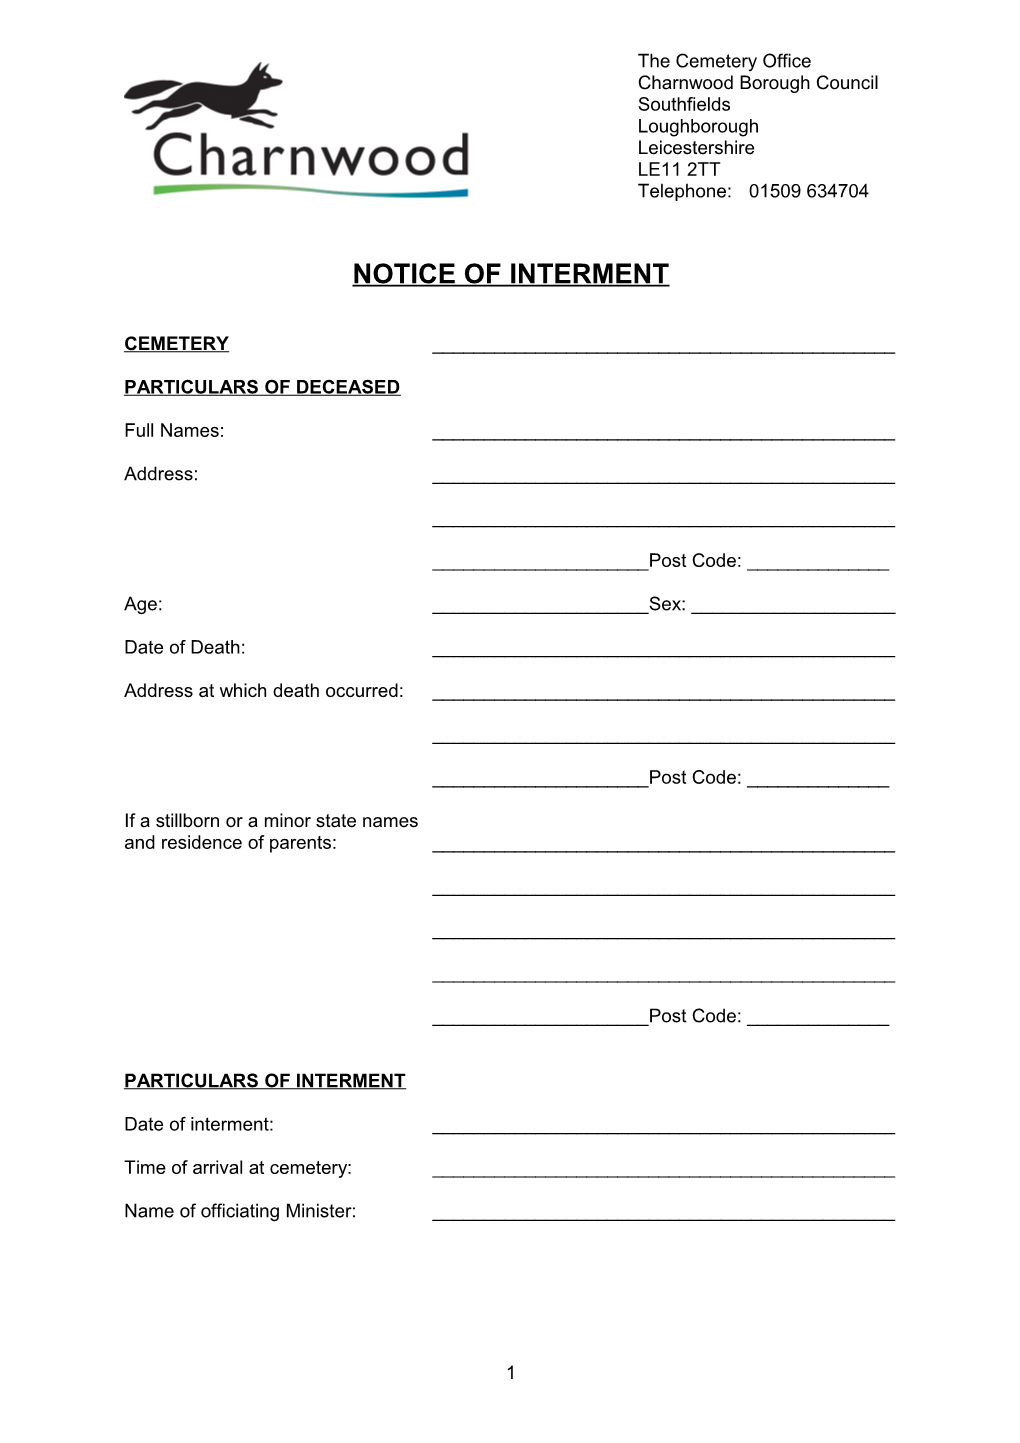 Notice of Interment